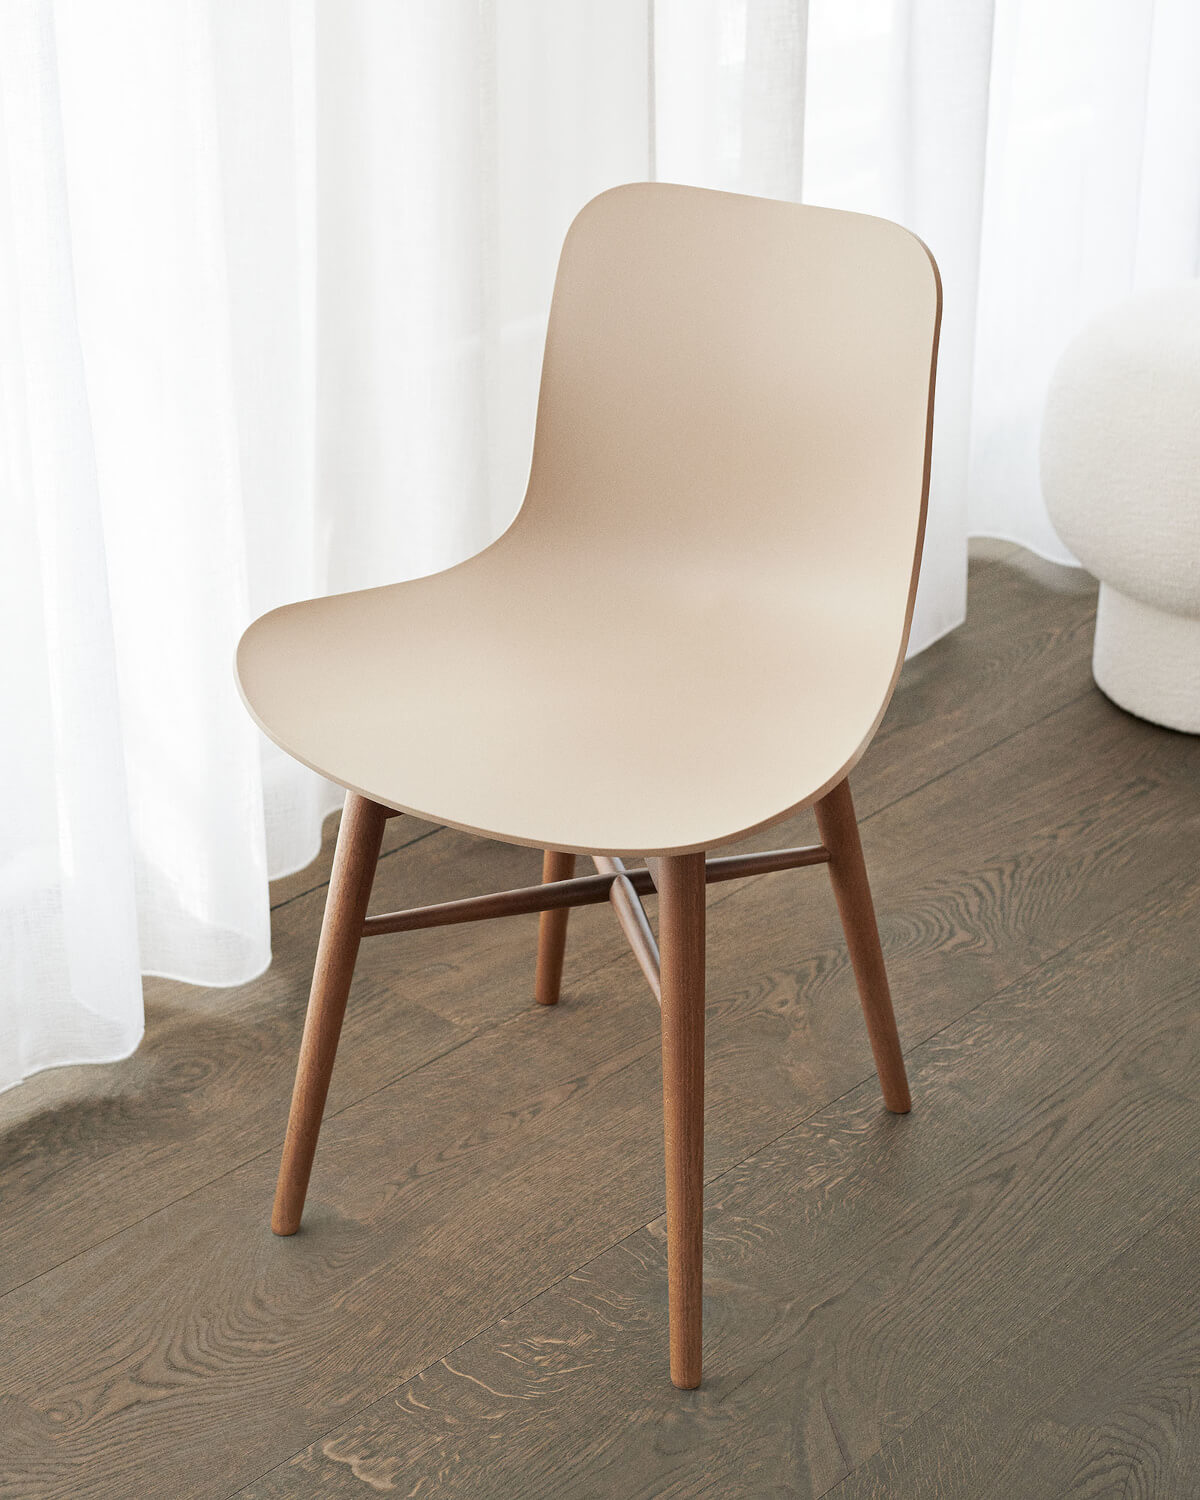 Langue Chair Wood, eiche natur / anthrazit black